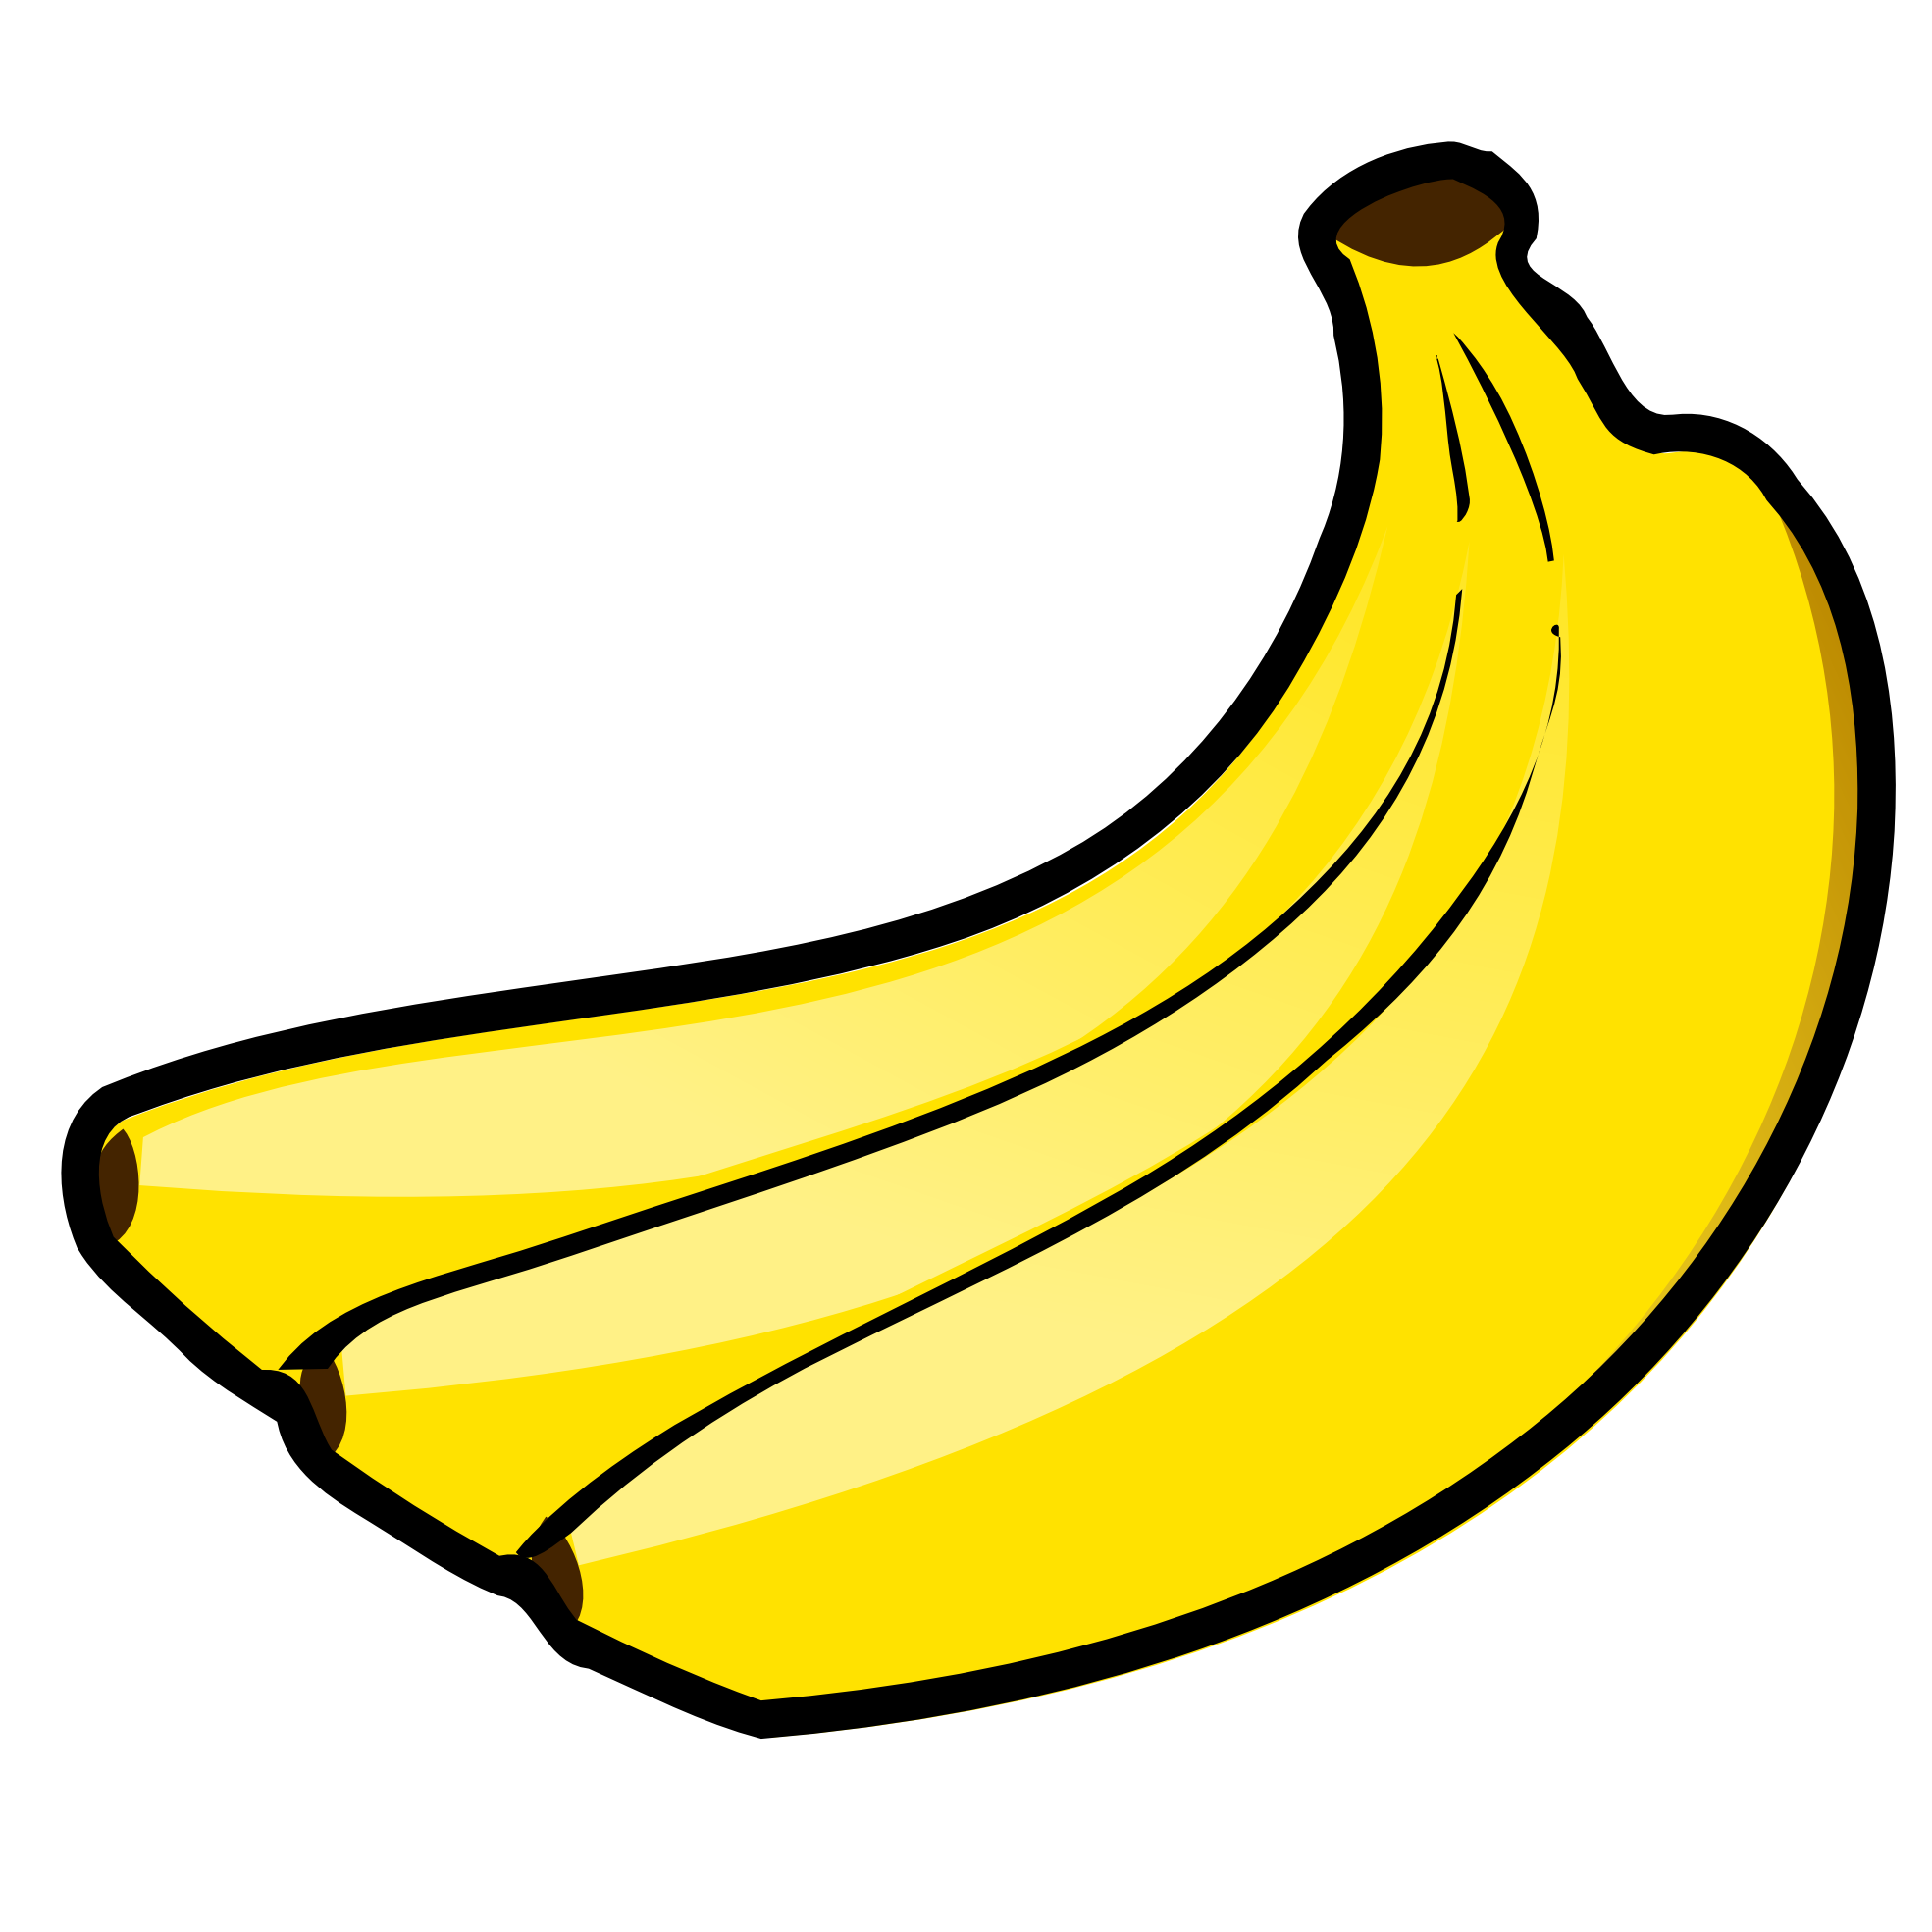 Banana family,Banana,Yellow,Fruit,Cooking plantain,Plant,Saba banana,Clip art,Food,Produce,Vegetarian food,Graphics